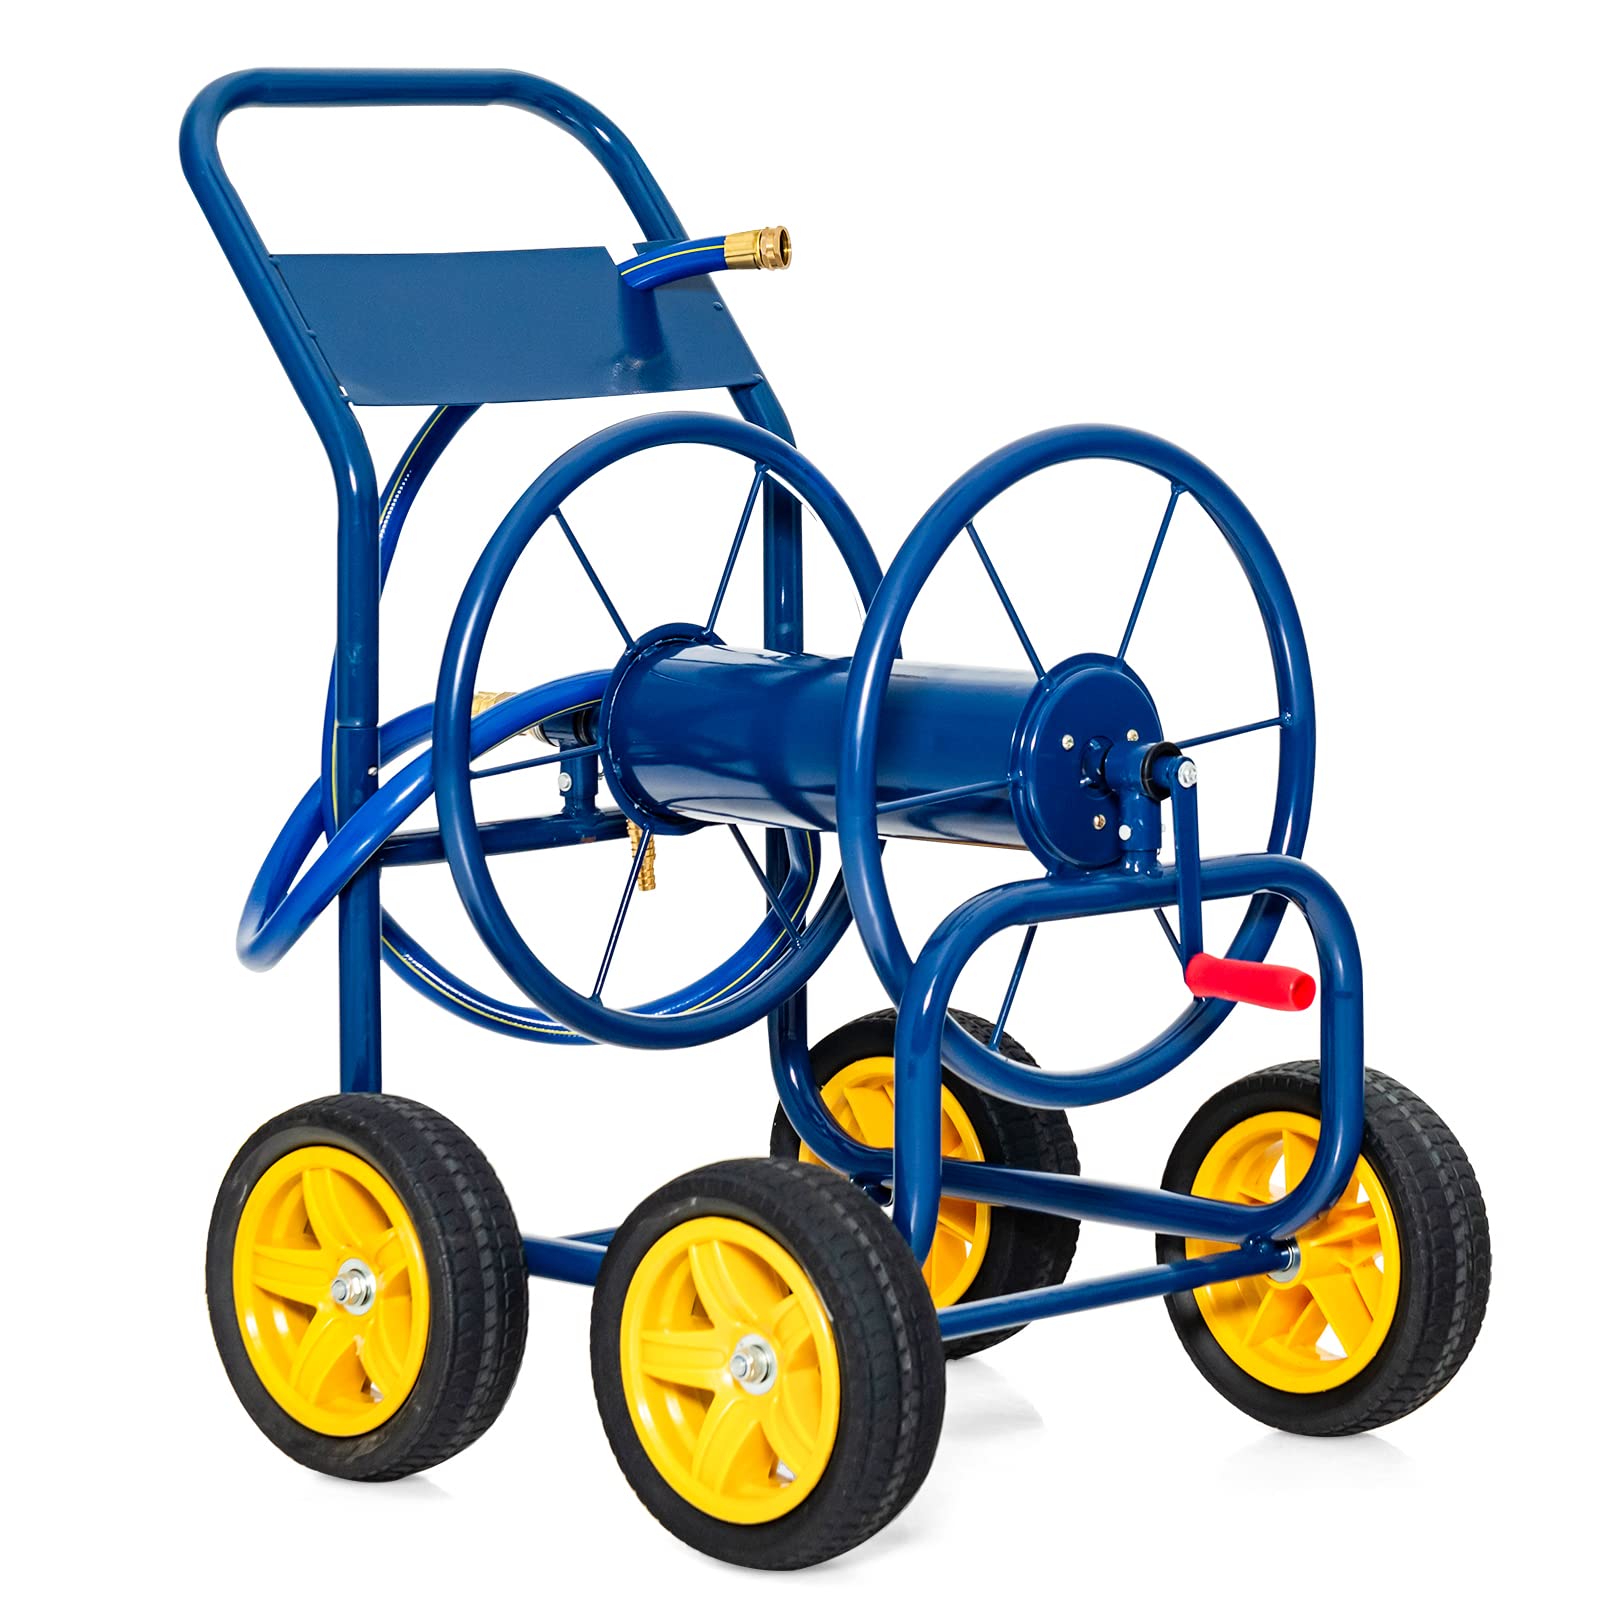 Giantex Garden Hose Reel Cart - Water Hose Cart with 4 Wheels & Non-slip Grip